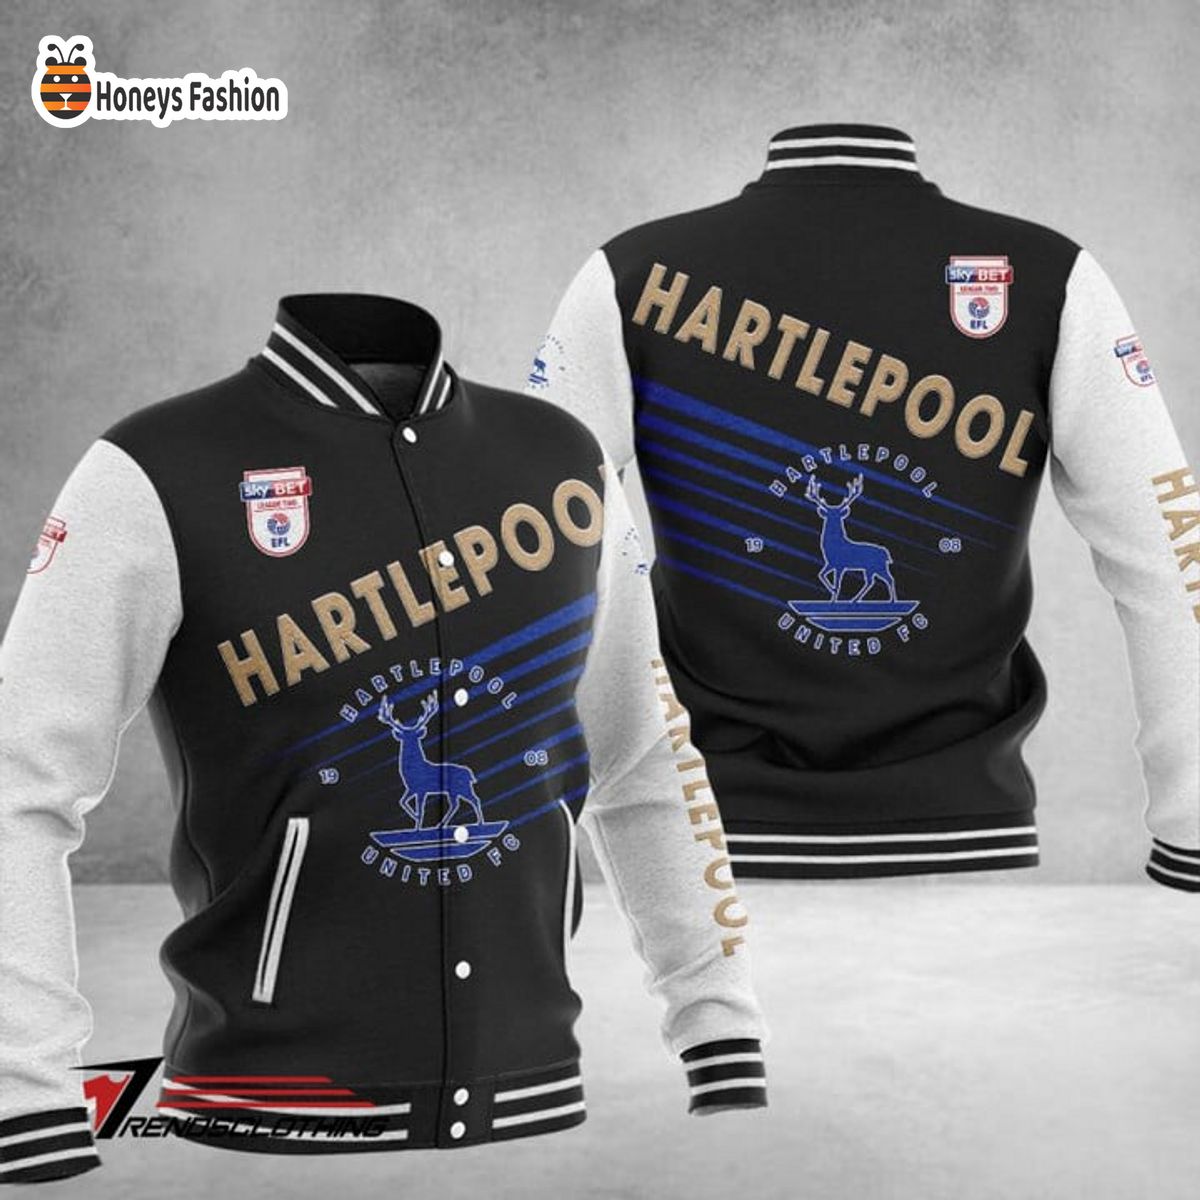 Hartlepool United Baseball Jacket